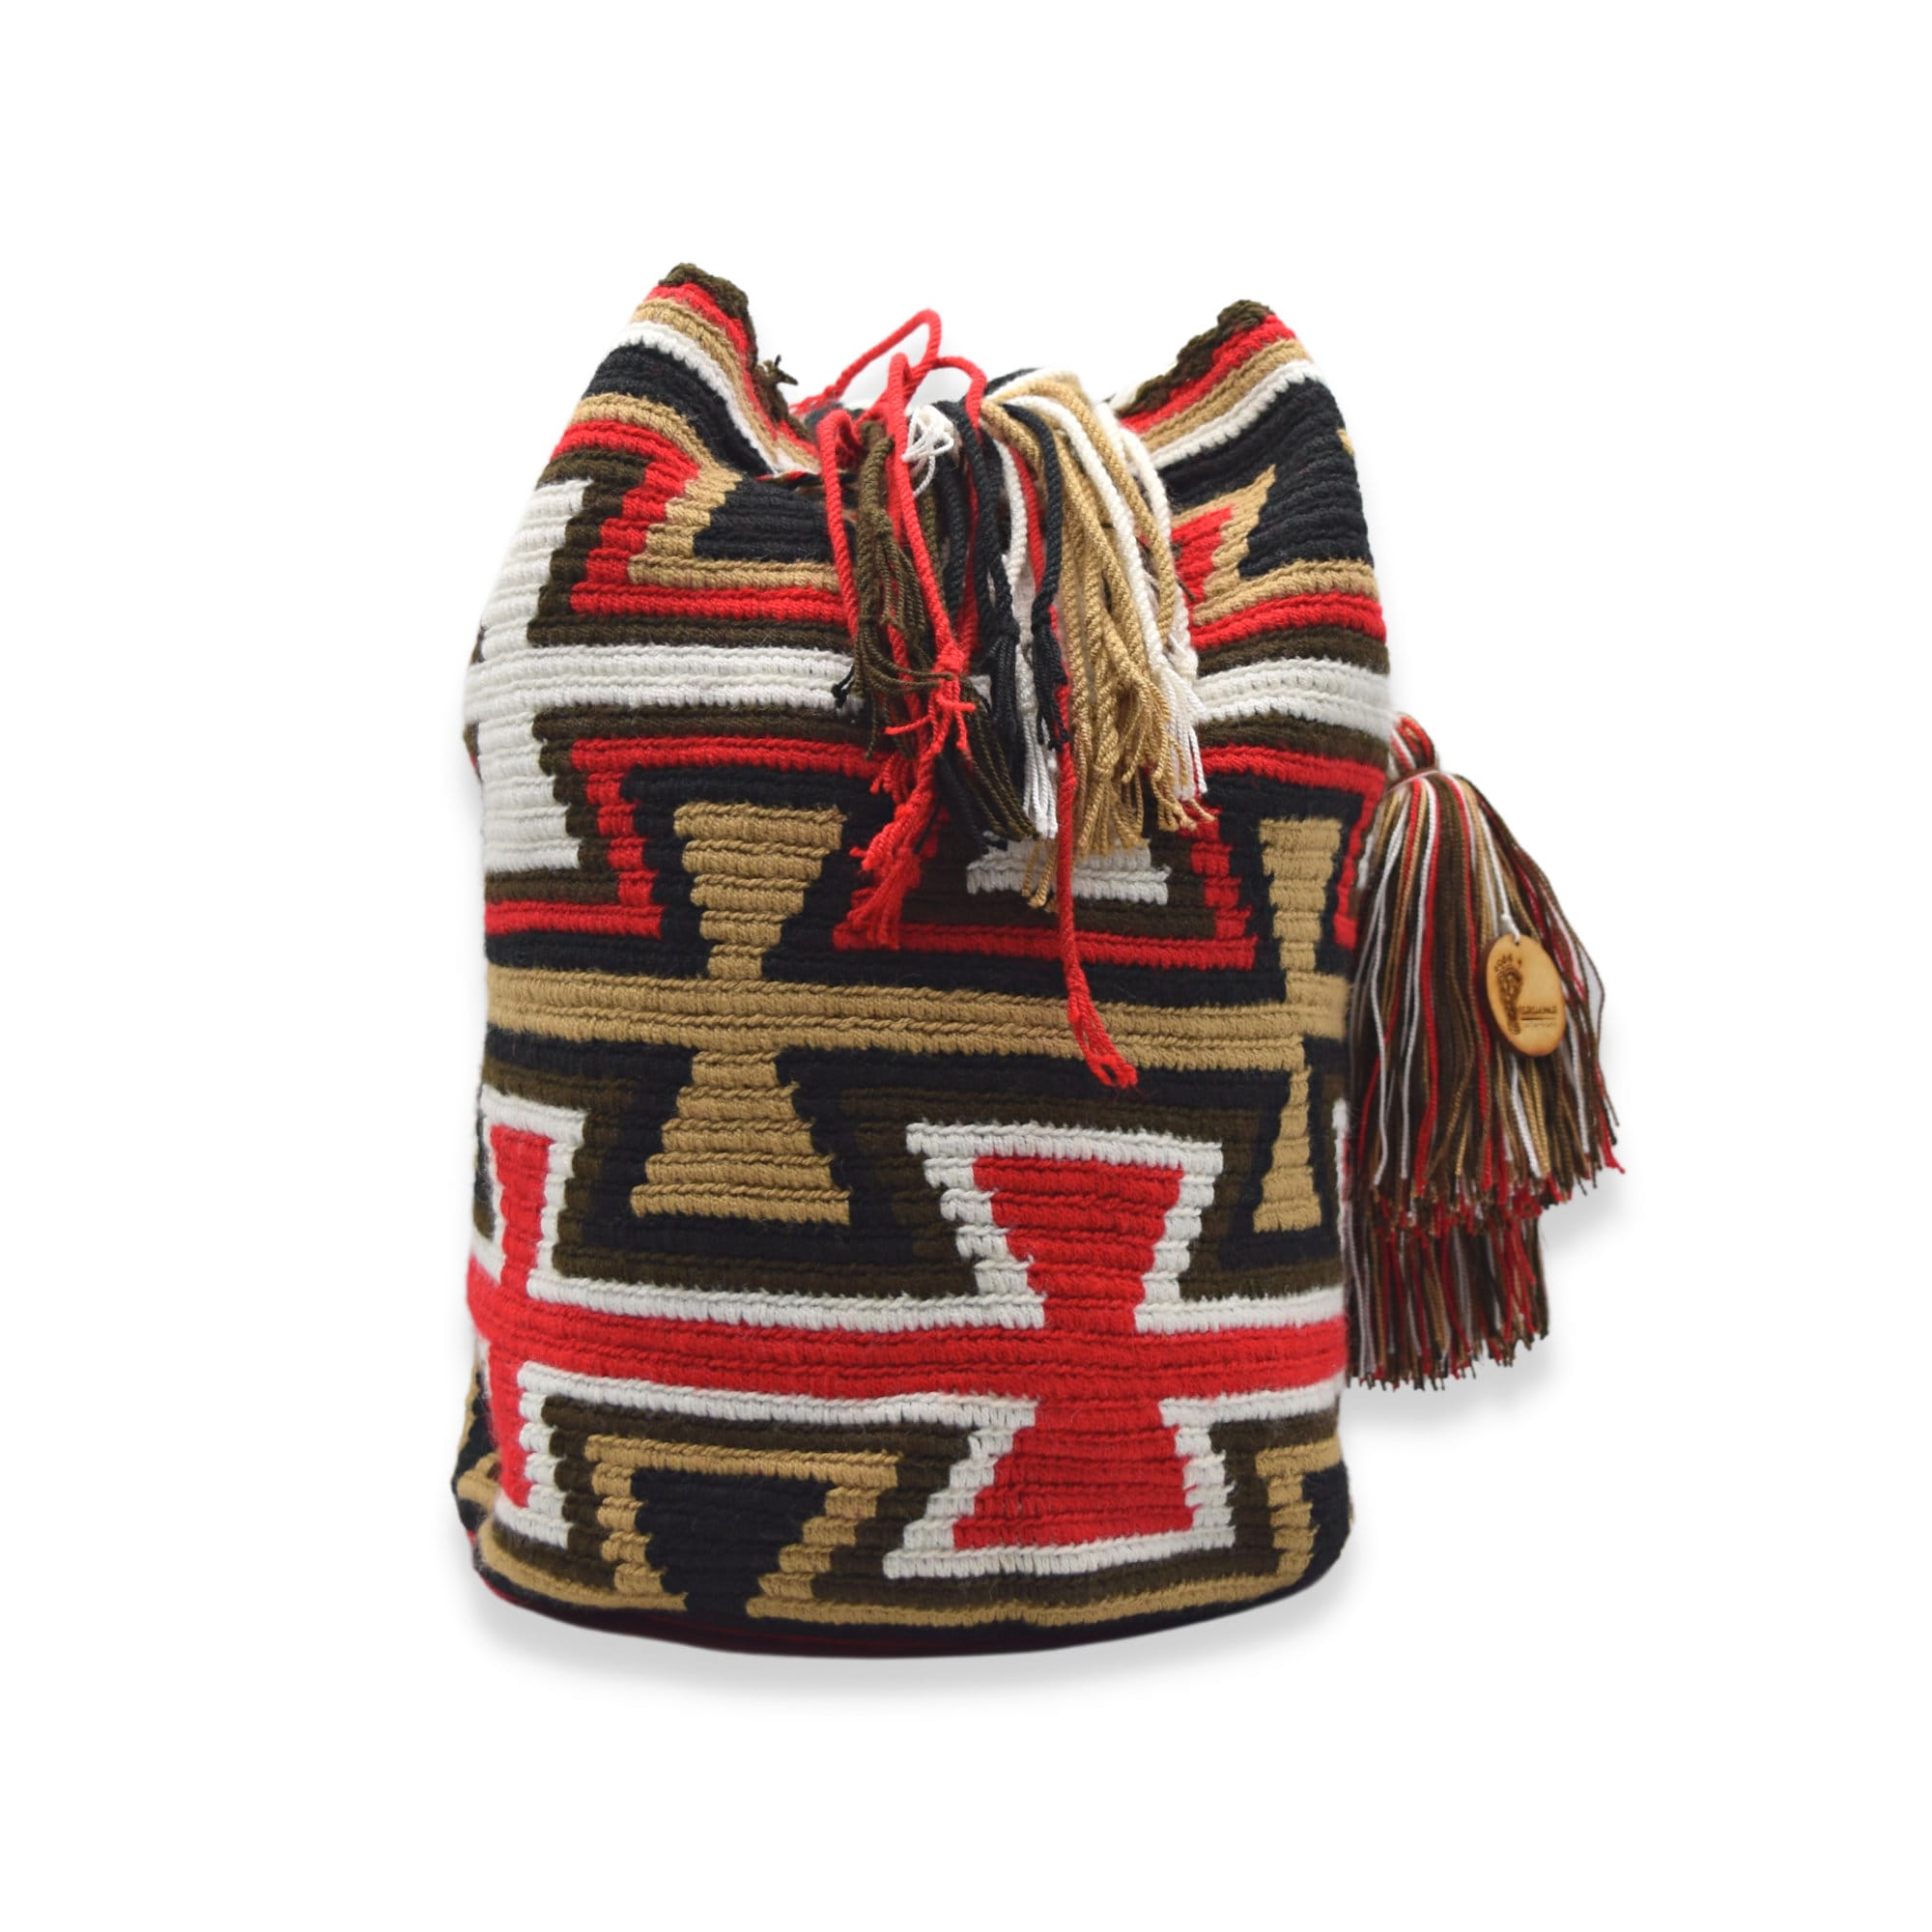 Wayuu mochila bag | Large Tradicional | Red, beige and white crosses